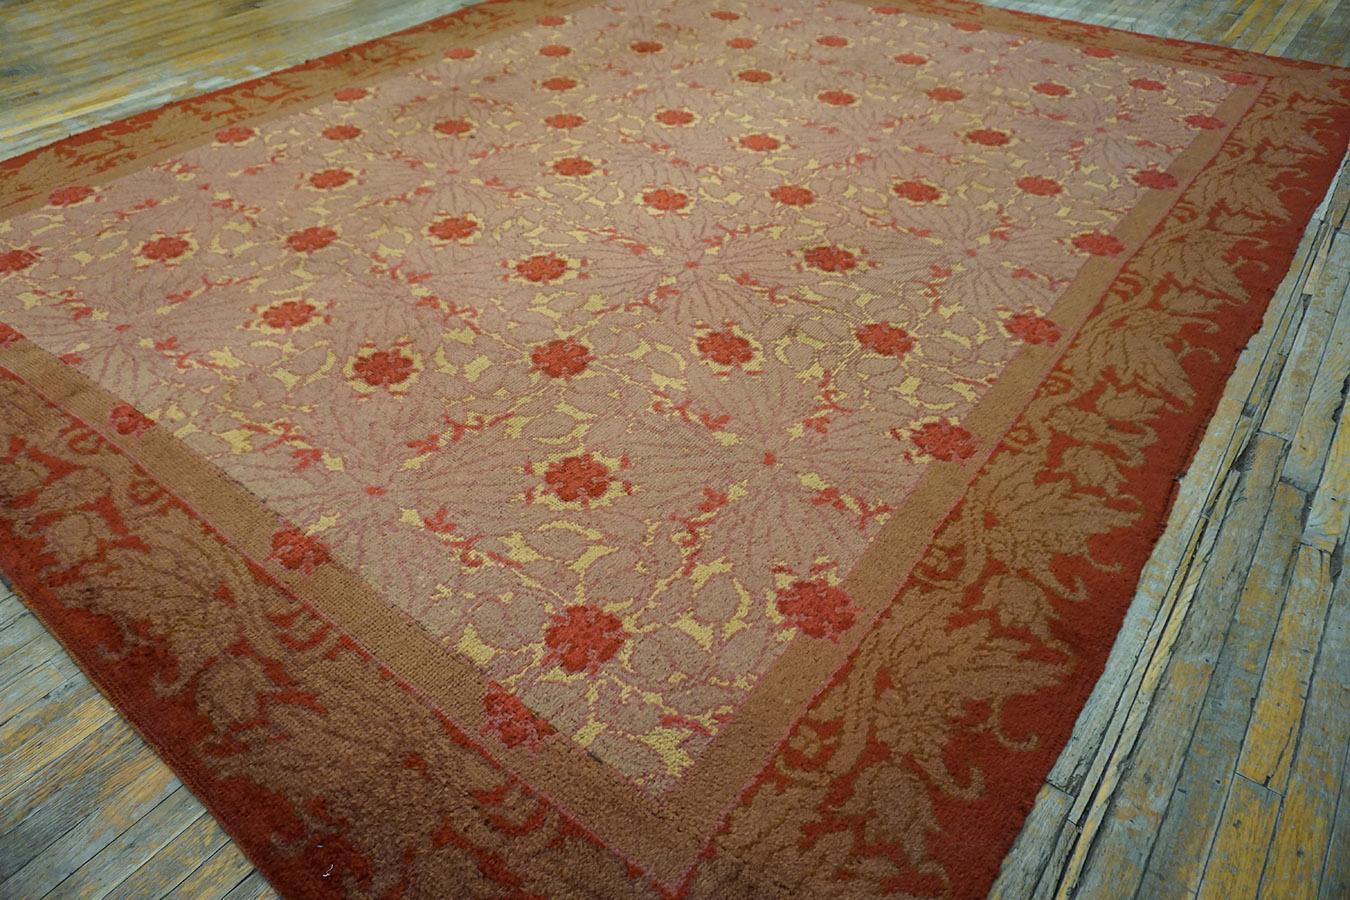 Early 20th Century Irish Donegal Arts & Crafts Carpet (10'8